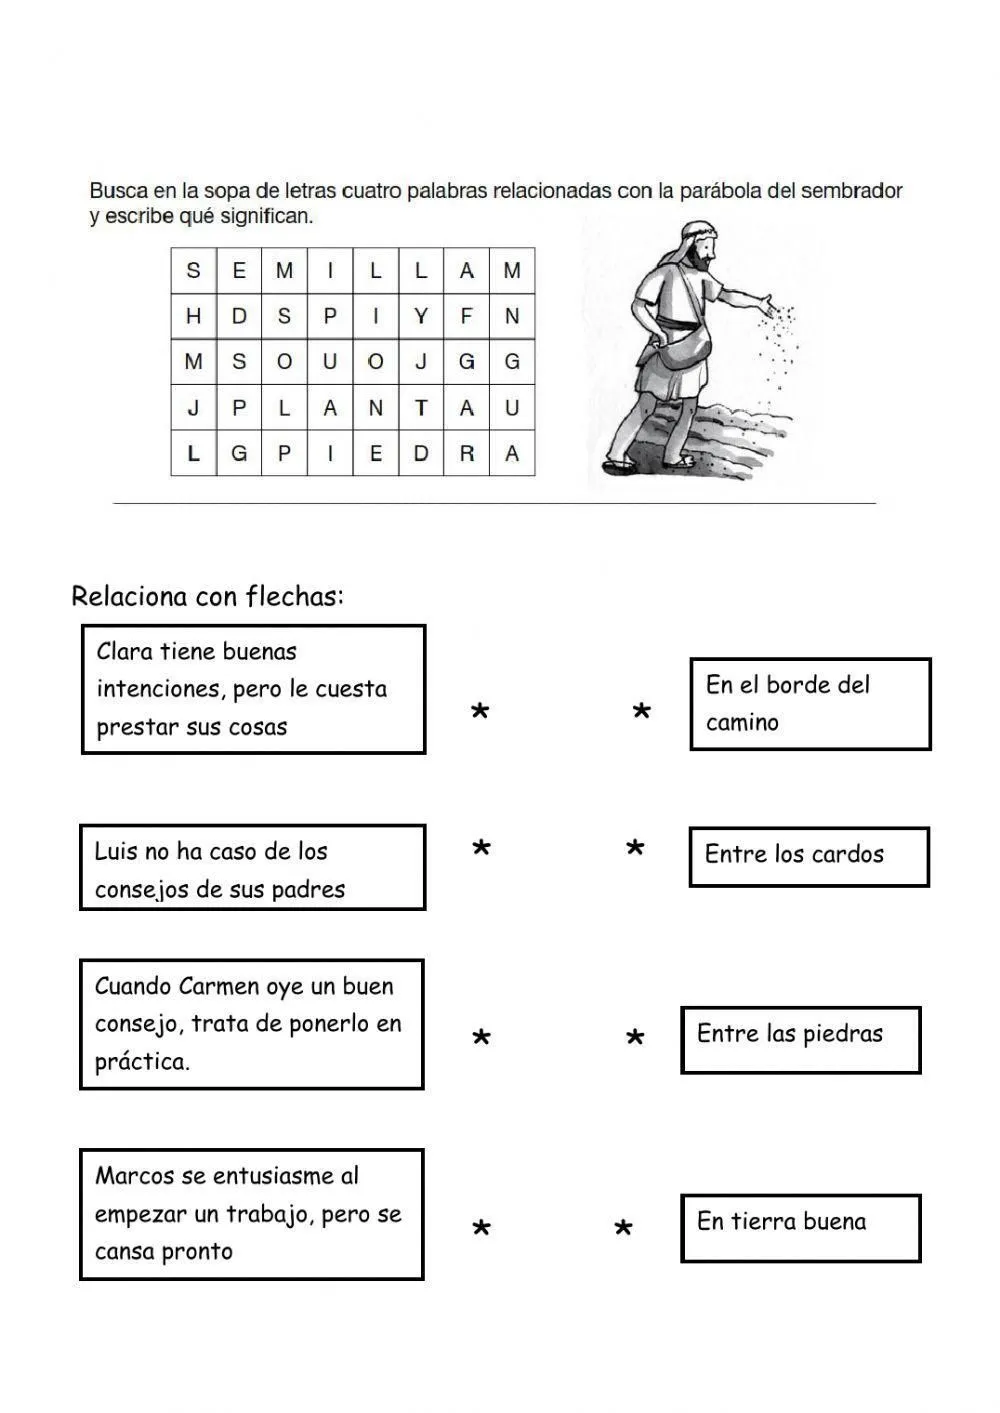 PARÁBOLA DEL SEMBRADOR interactive worksheet | Live Worksheets